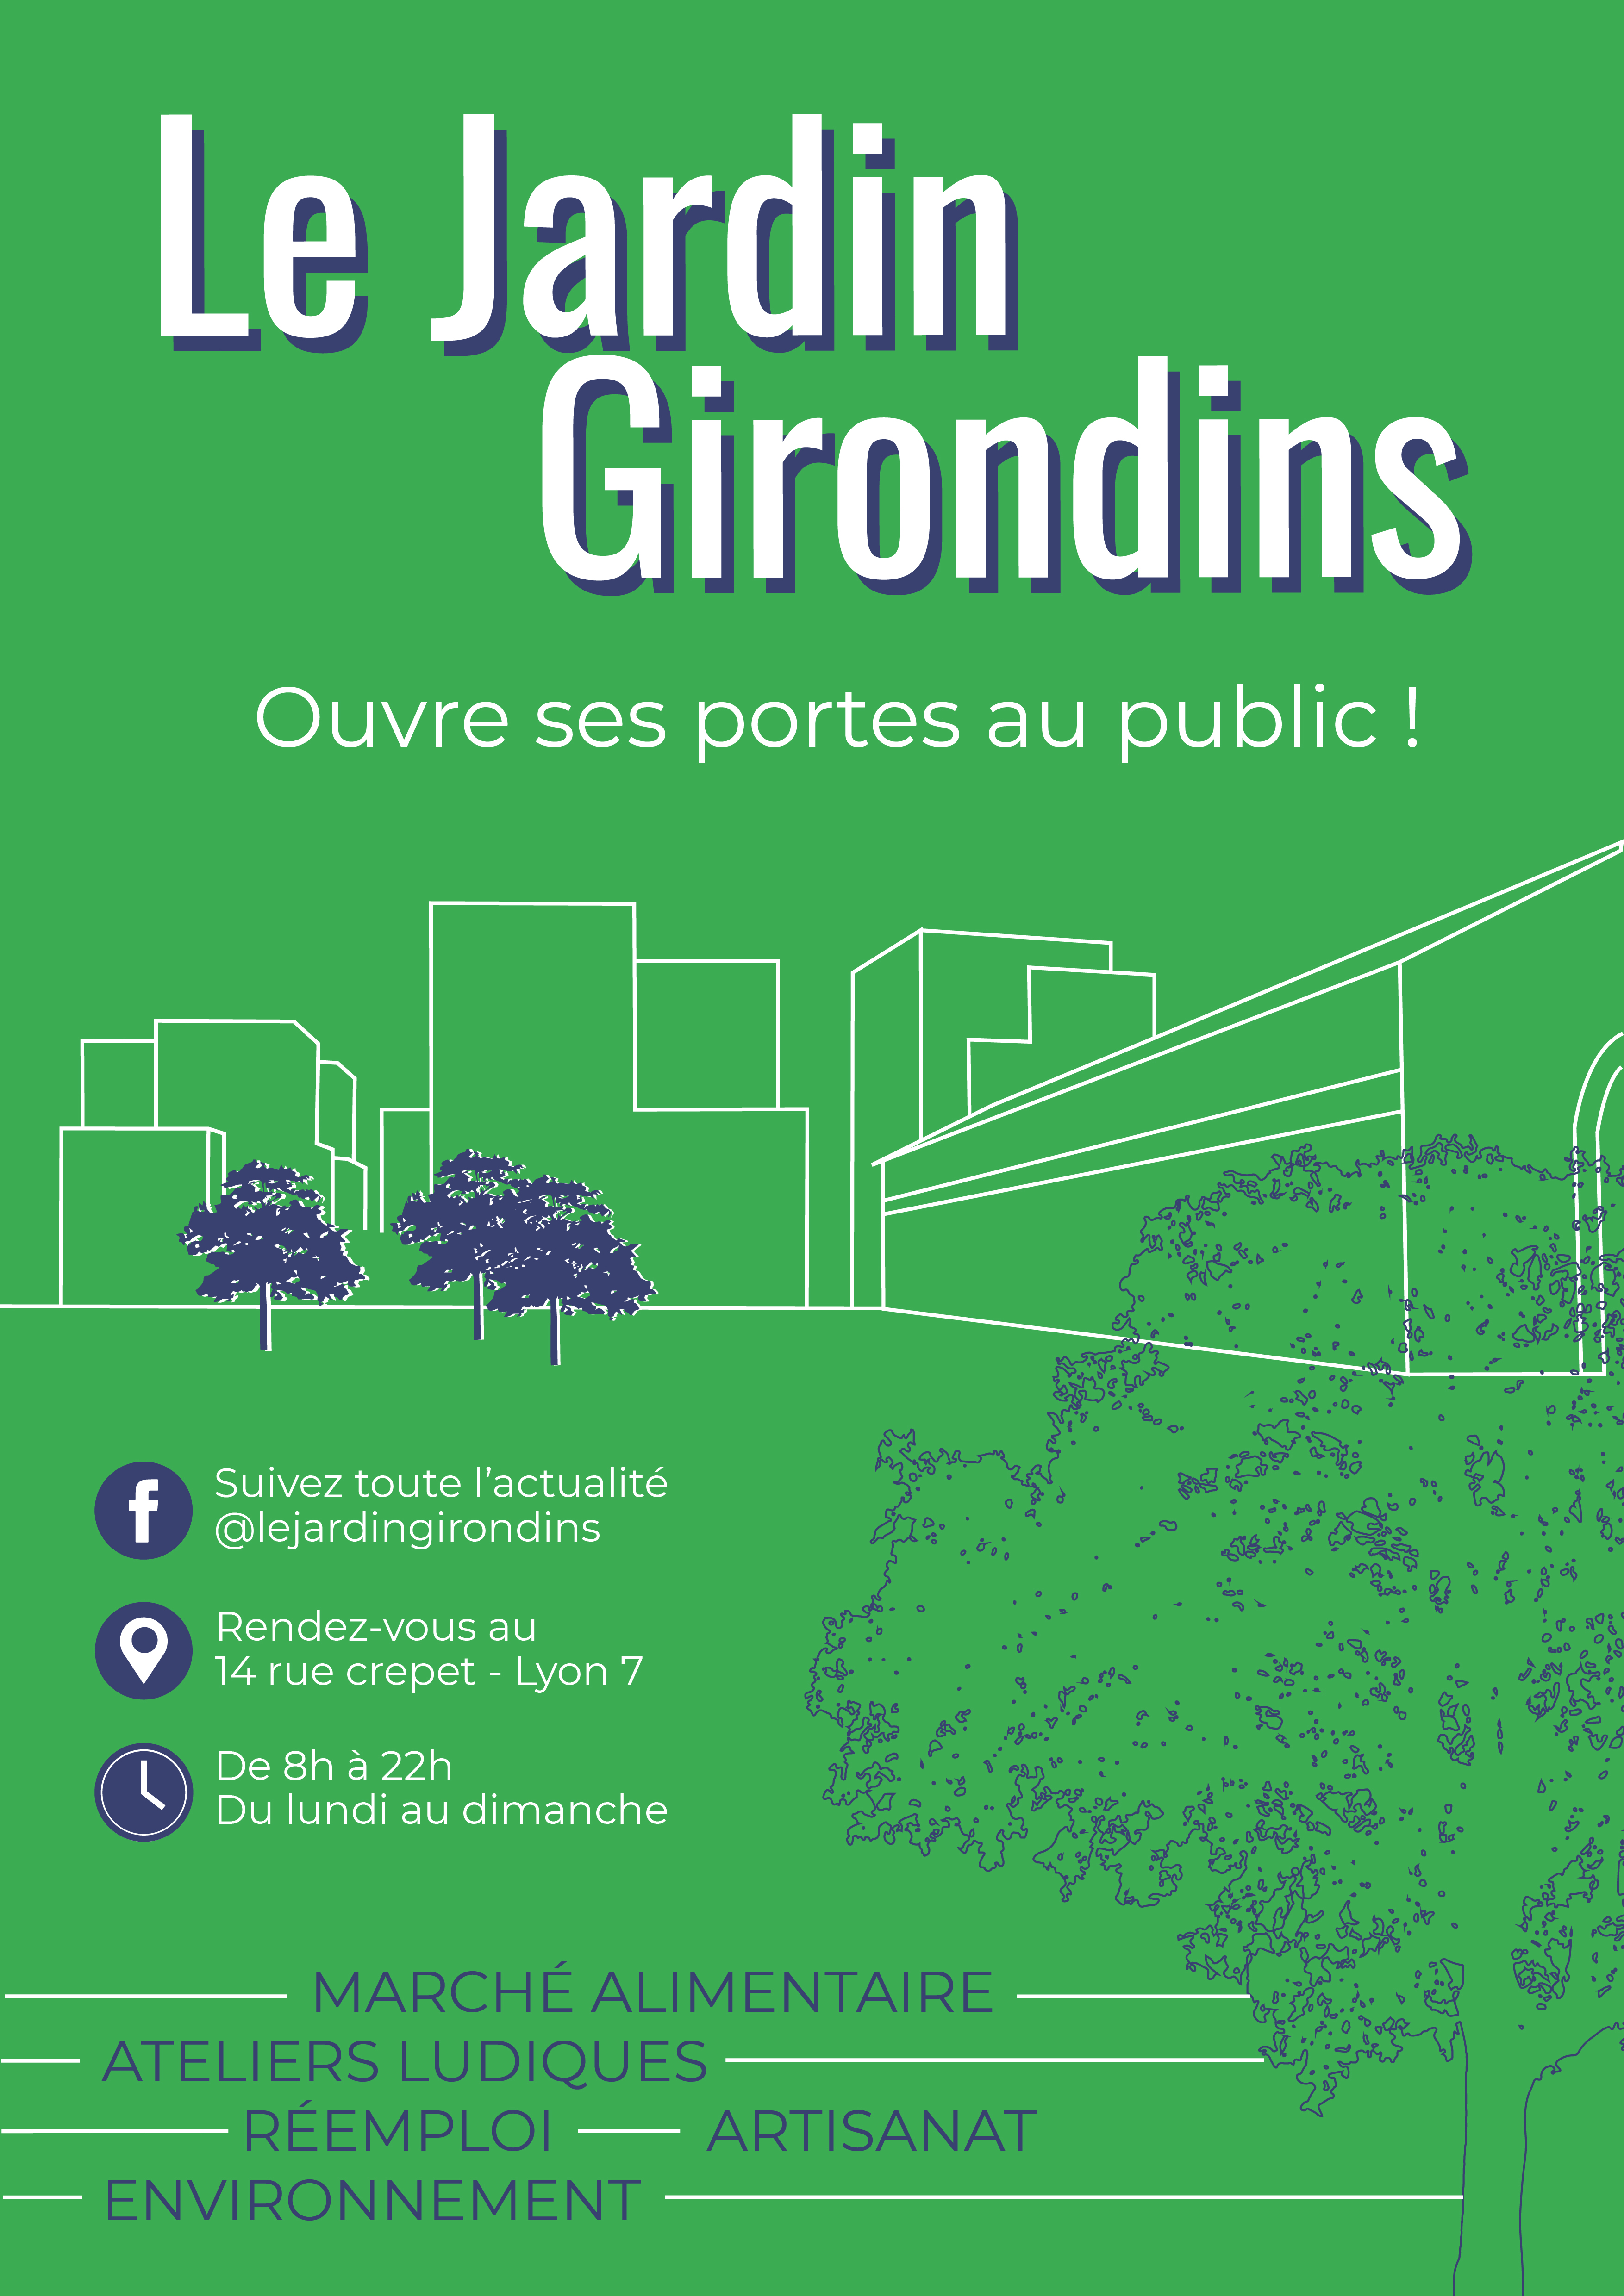 Le jardin des Girondins - 2 